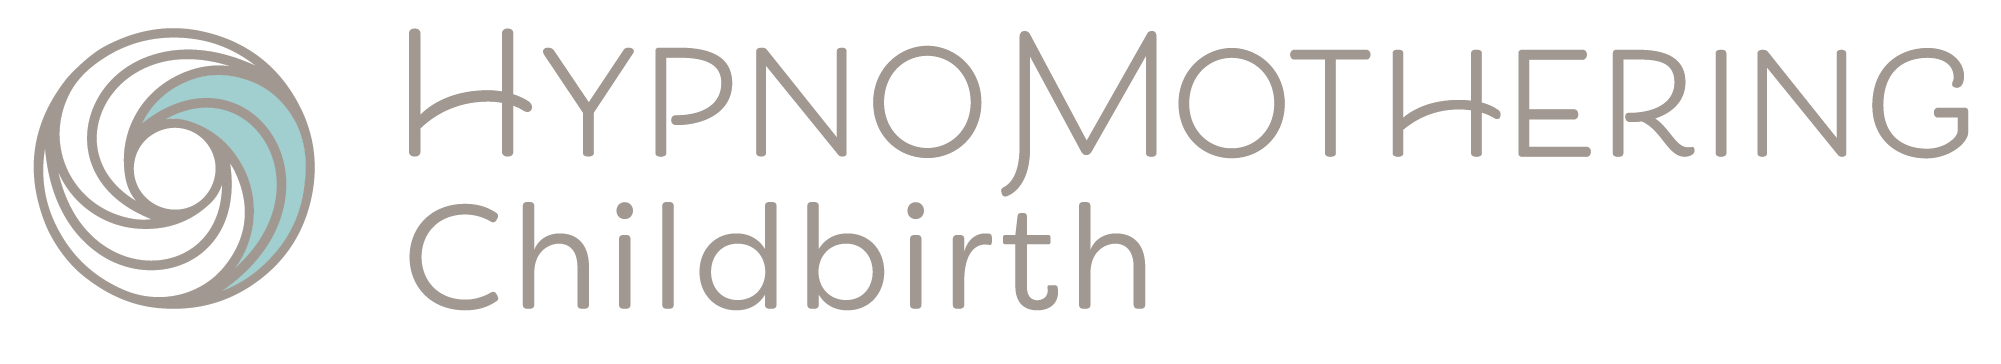 Hypnomothering Childbirth logo